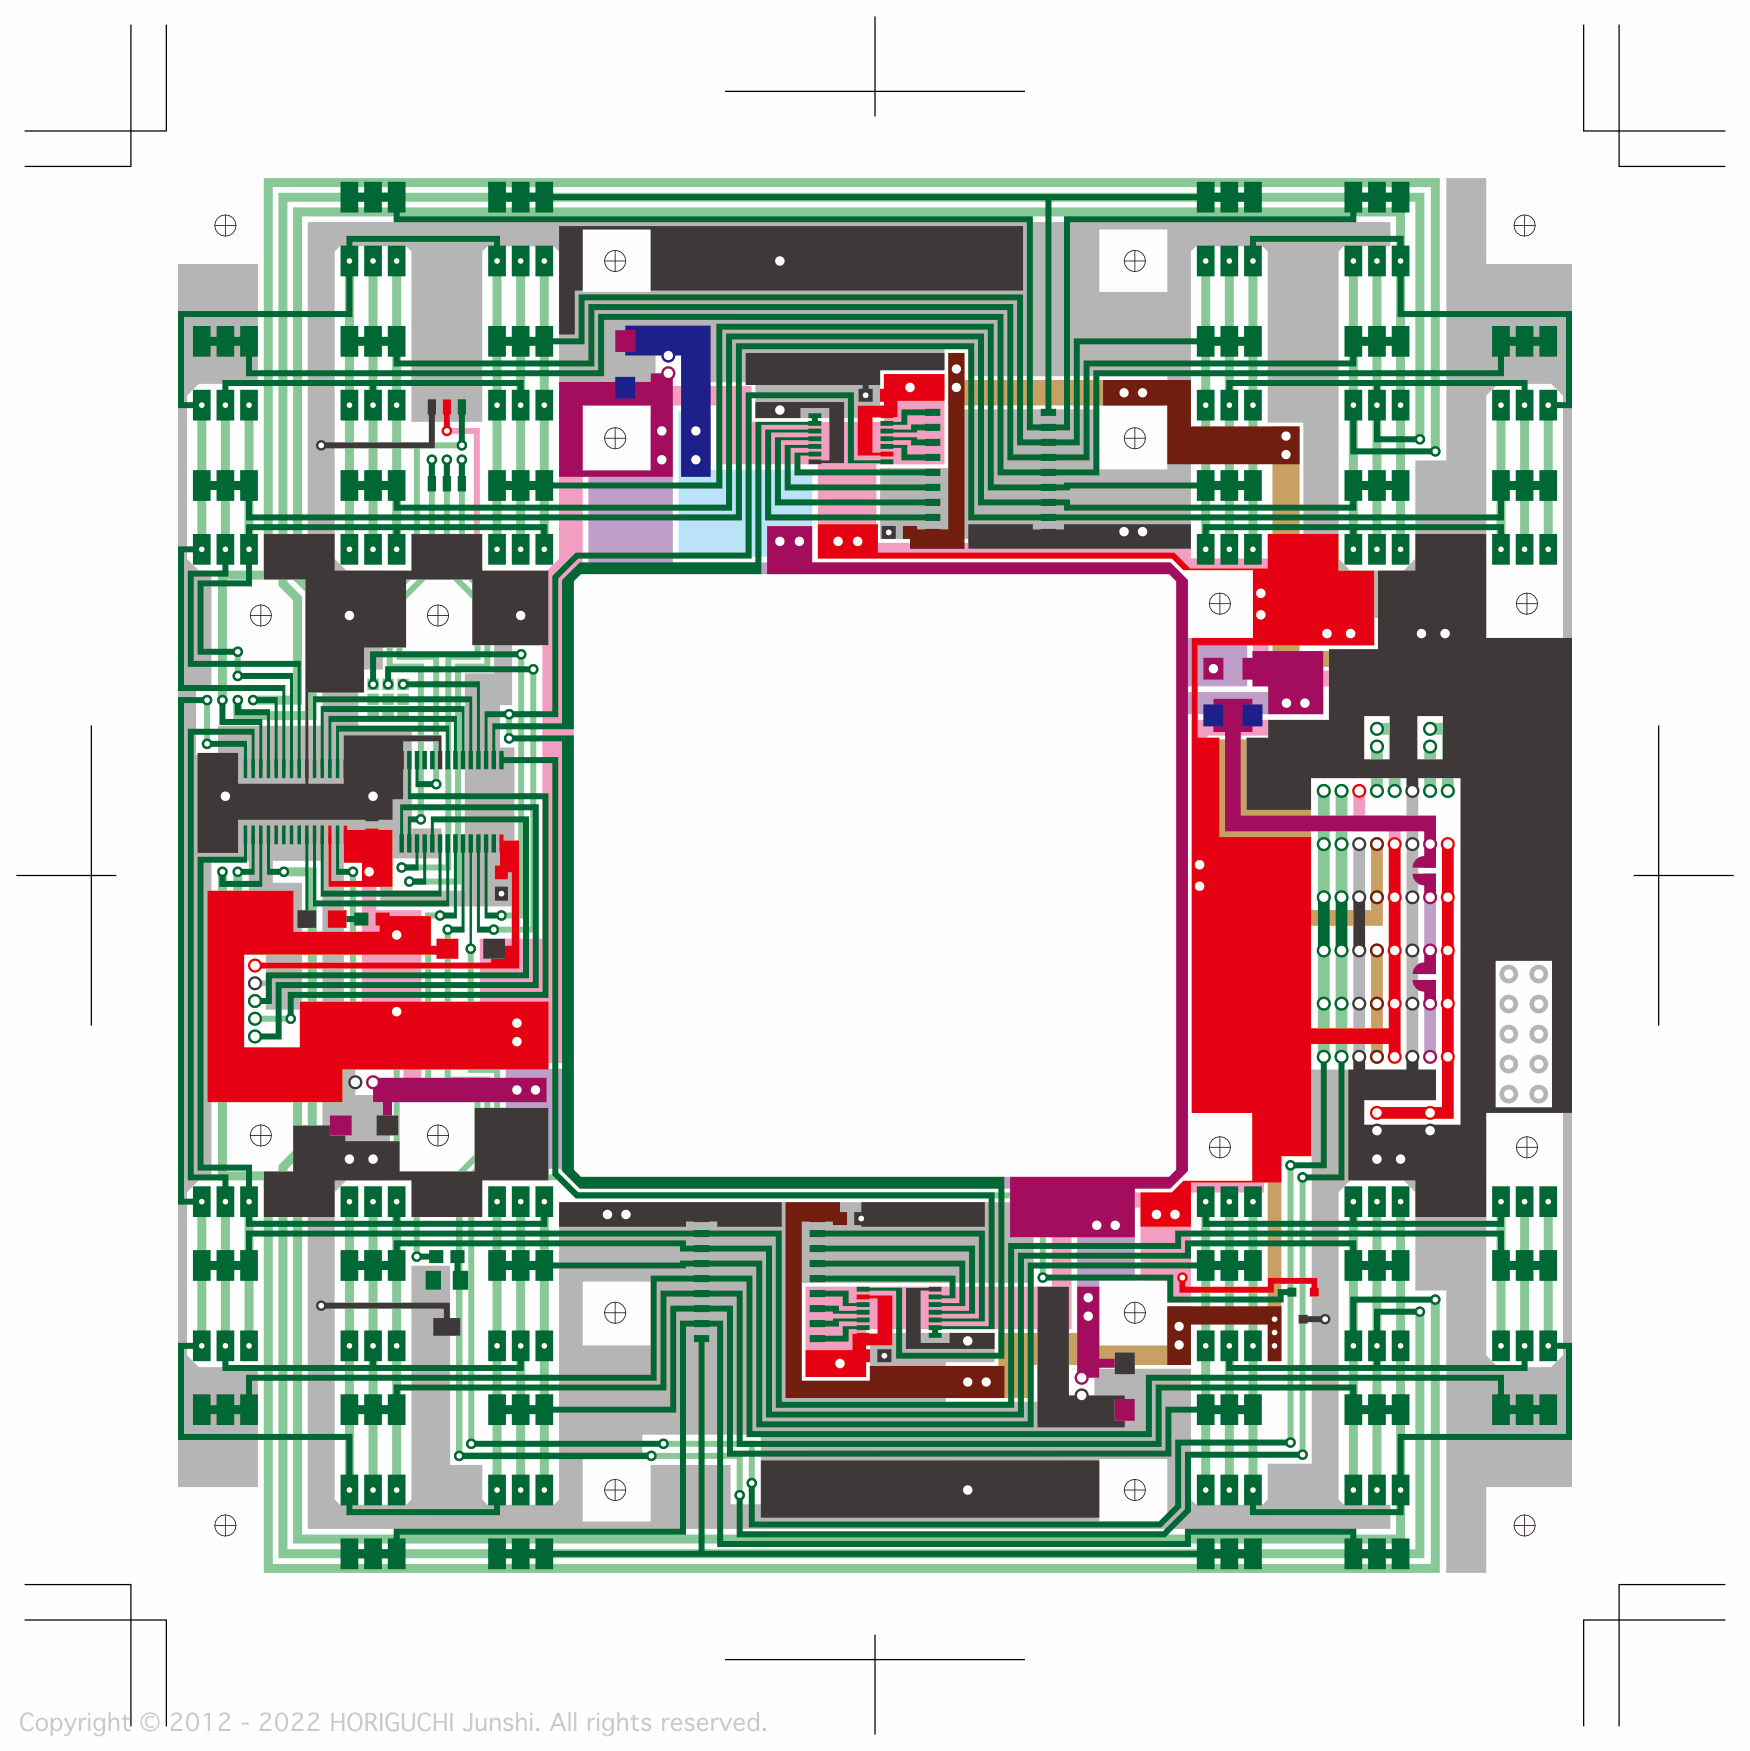 OLED + Connector unit PCB design